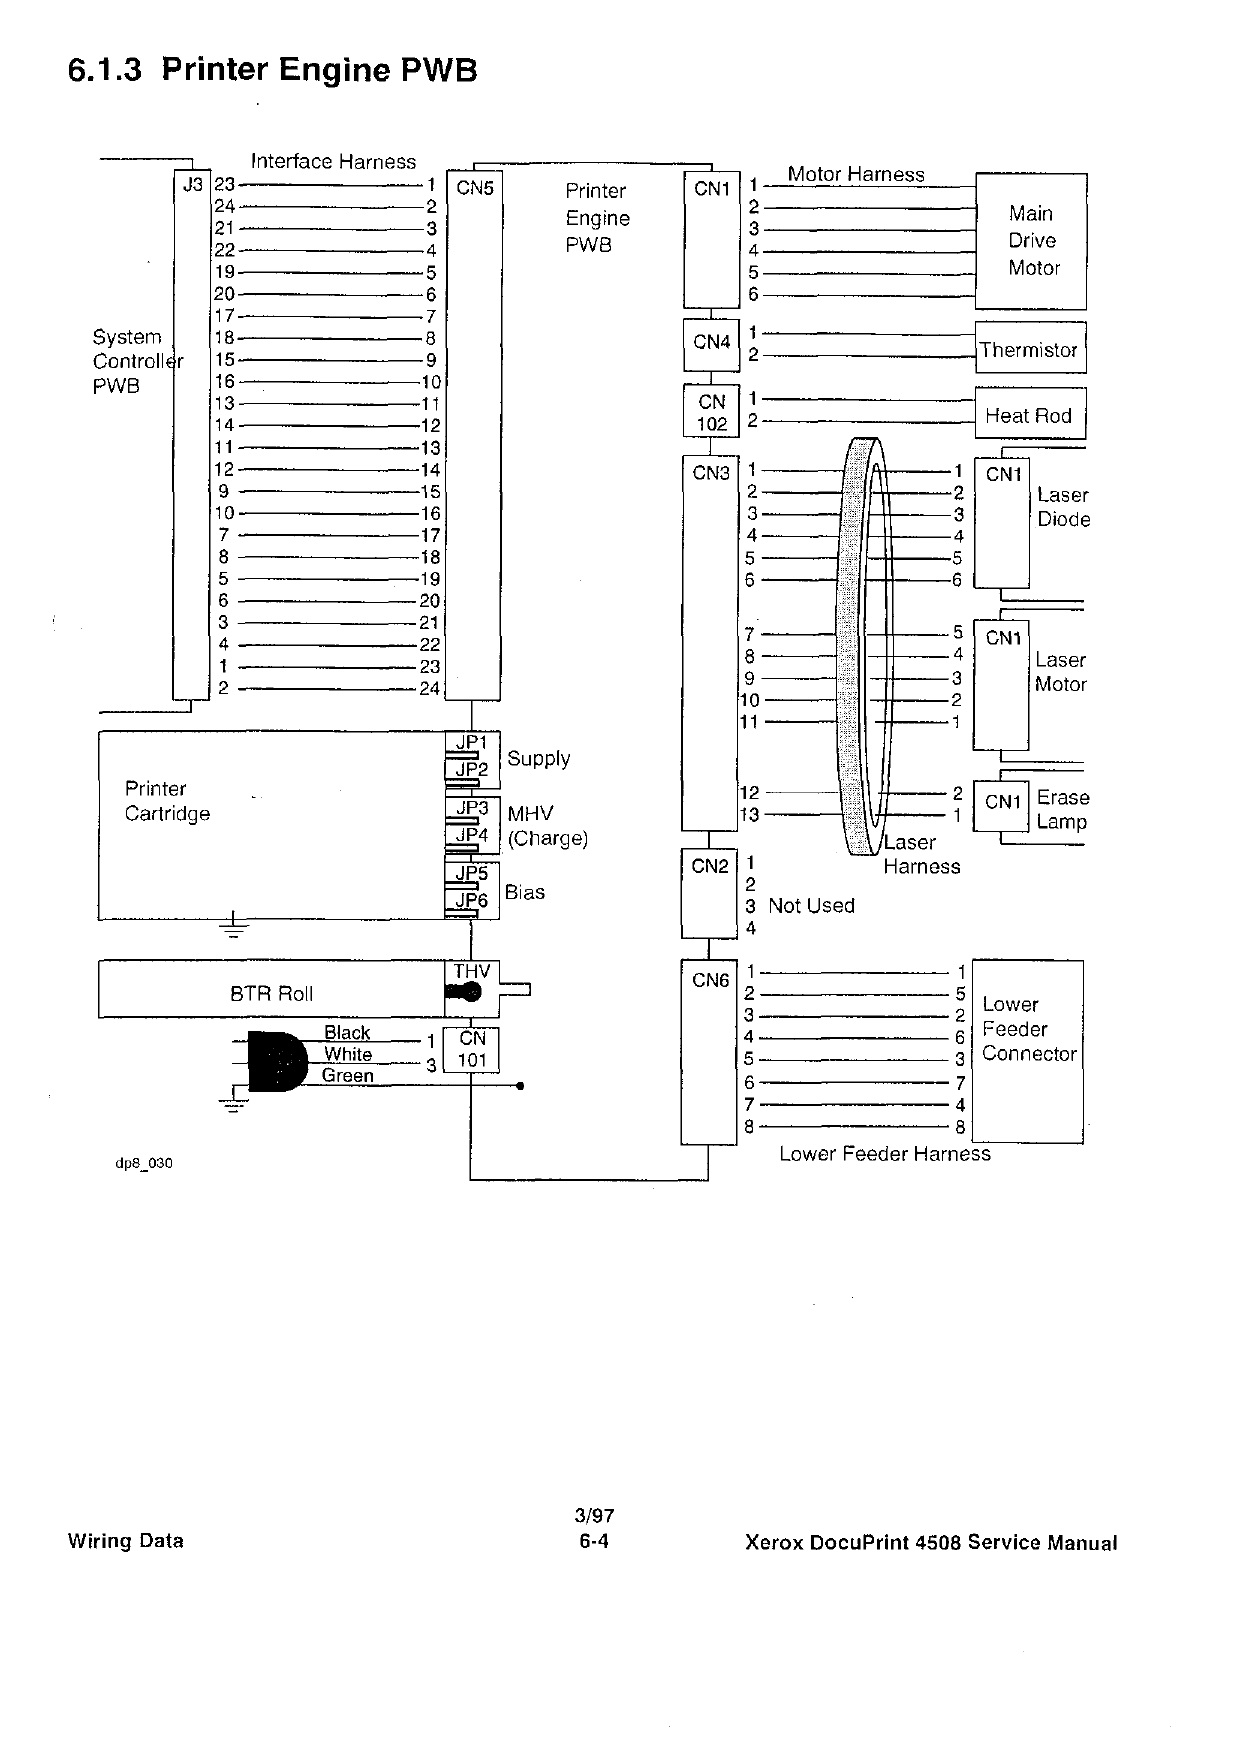 Xerox DocuPrint 4508 Parts List and Service Manual-5